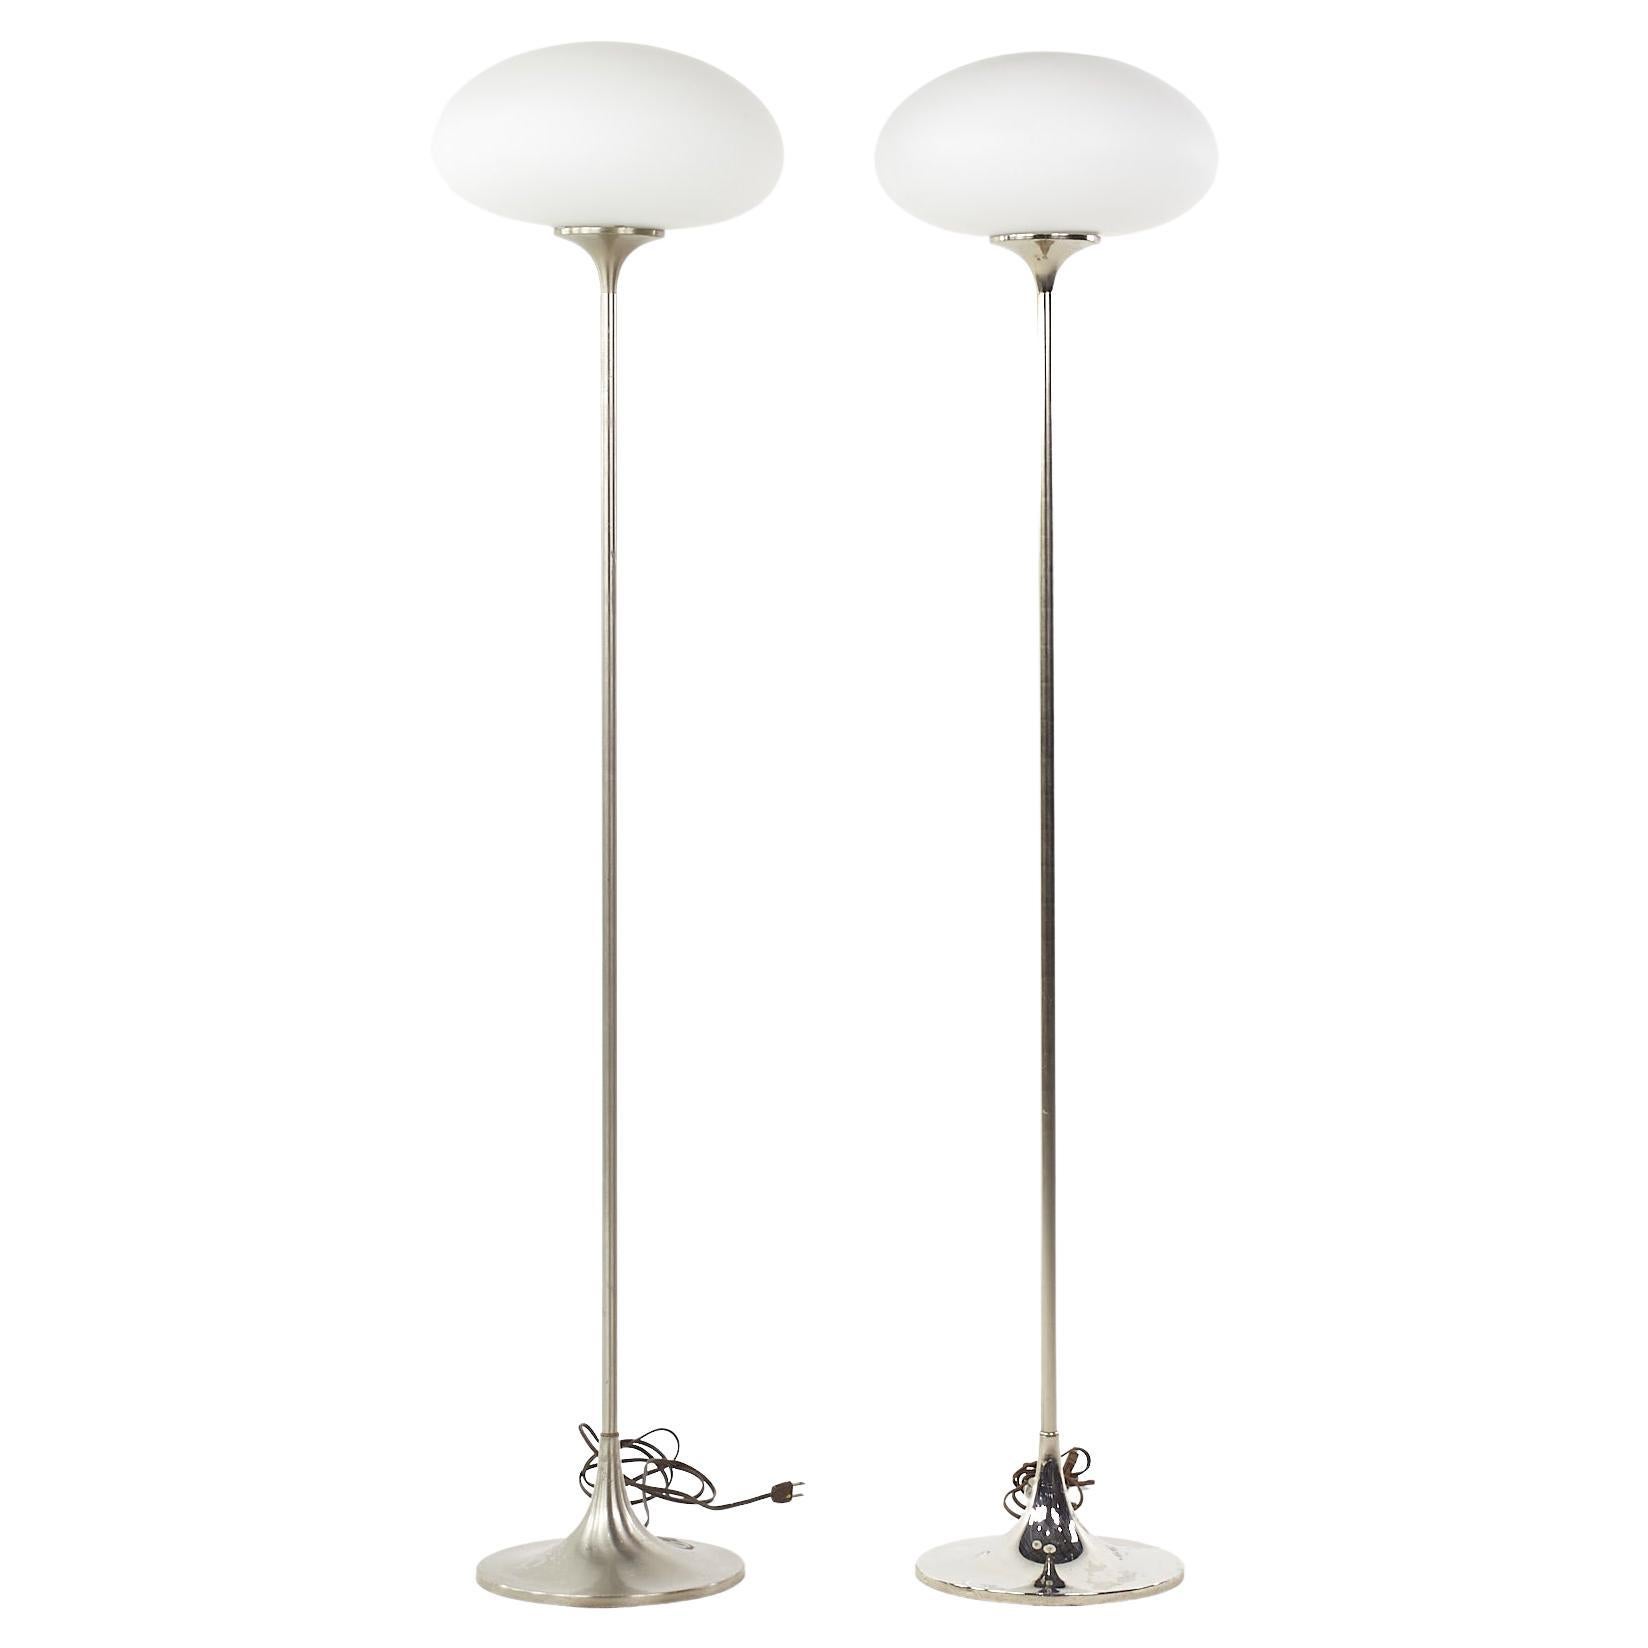 Laurel Lamp Company Mid Century Stainless Steel Tulip Floor Lamp - Pair